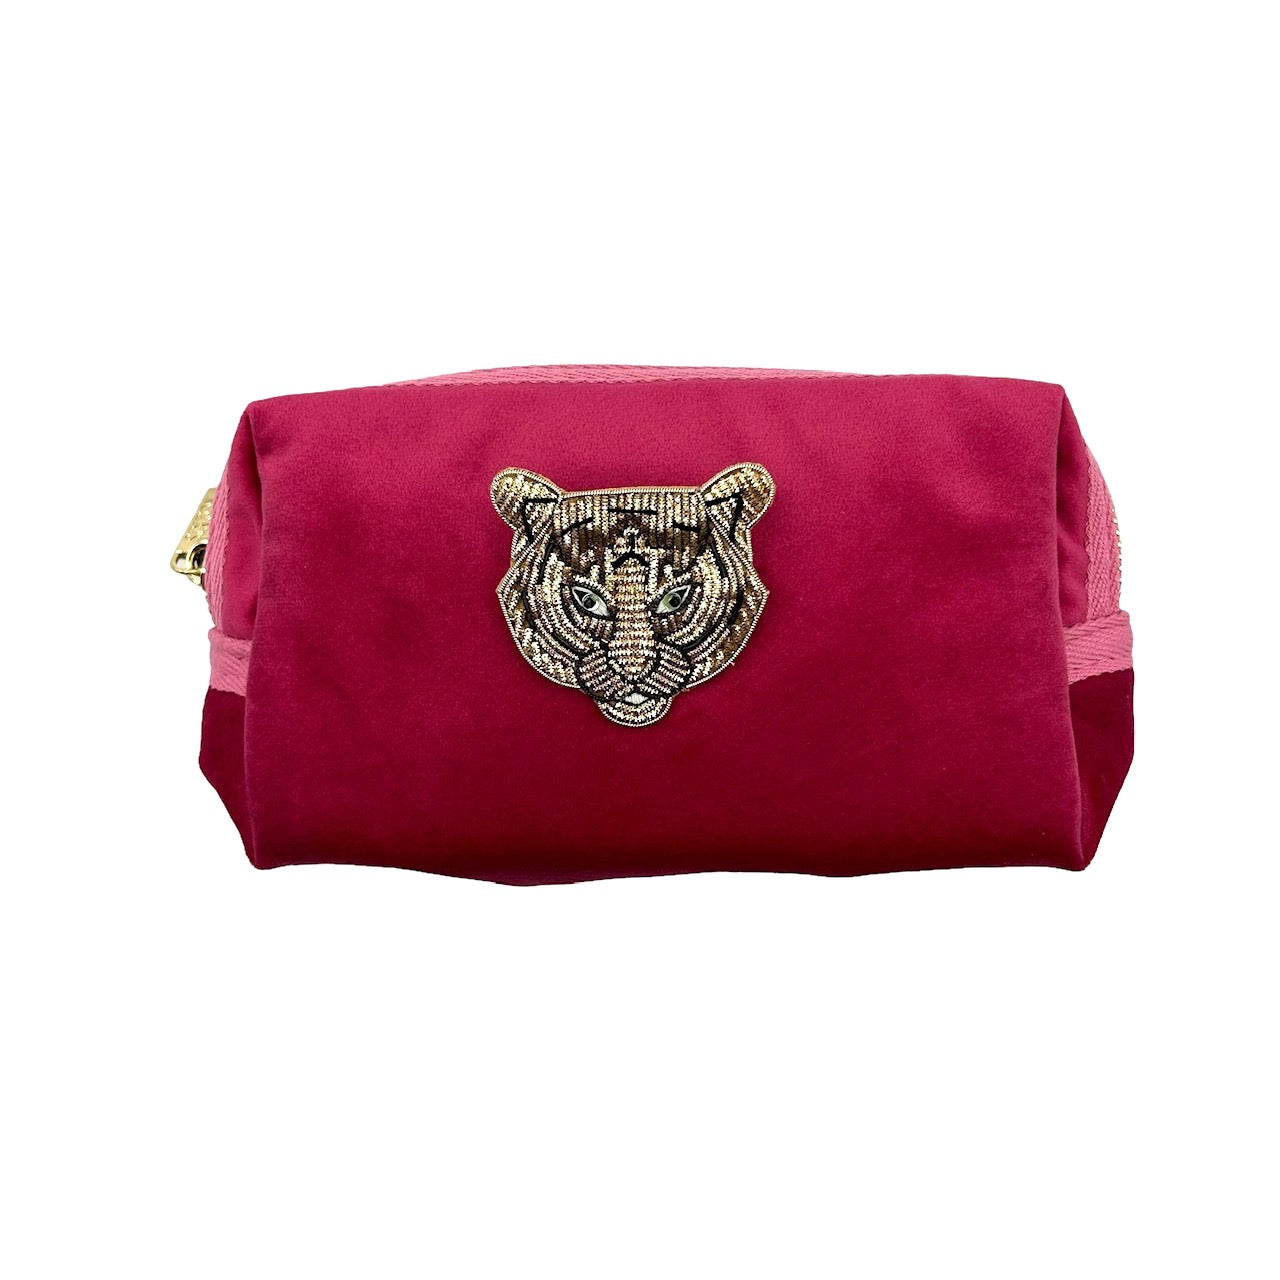 Bright pink make-up bag & tiger head pin - recycled velvet